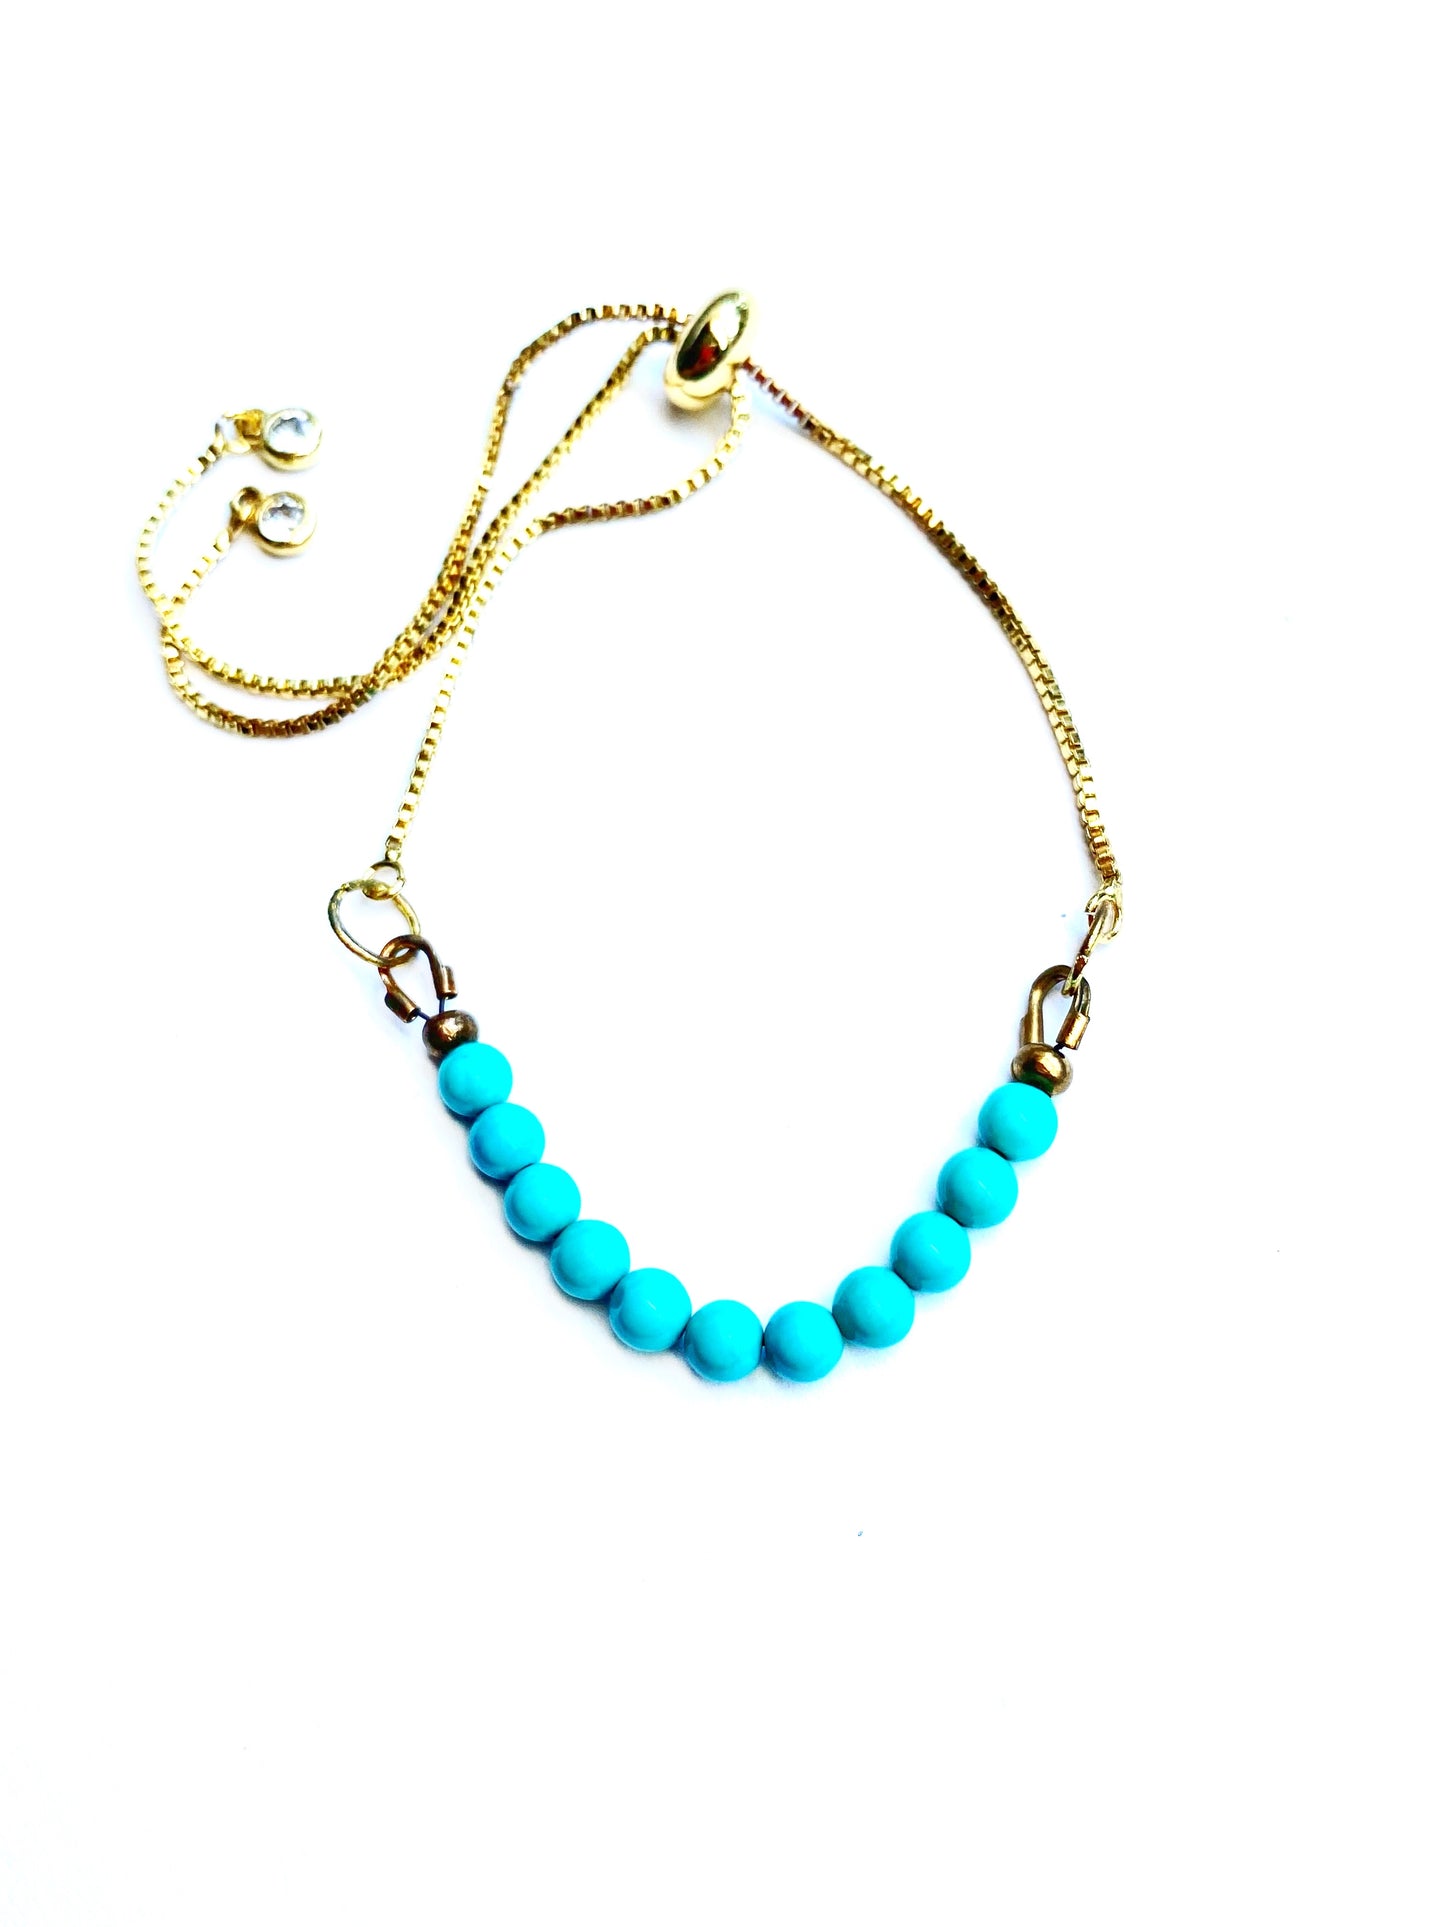 Gold-Plated Boho Bracelet with Turquoise Beads